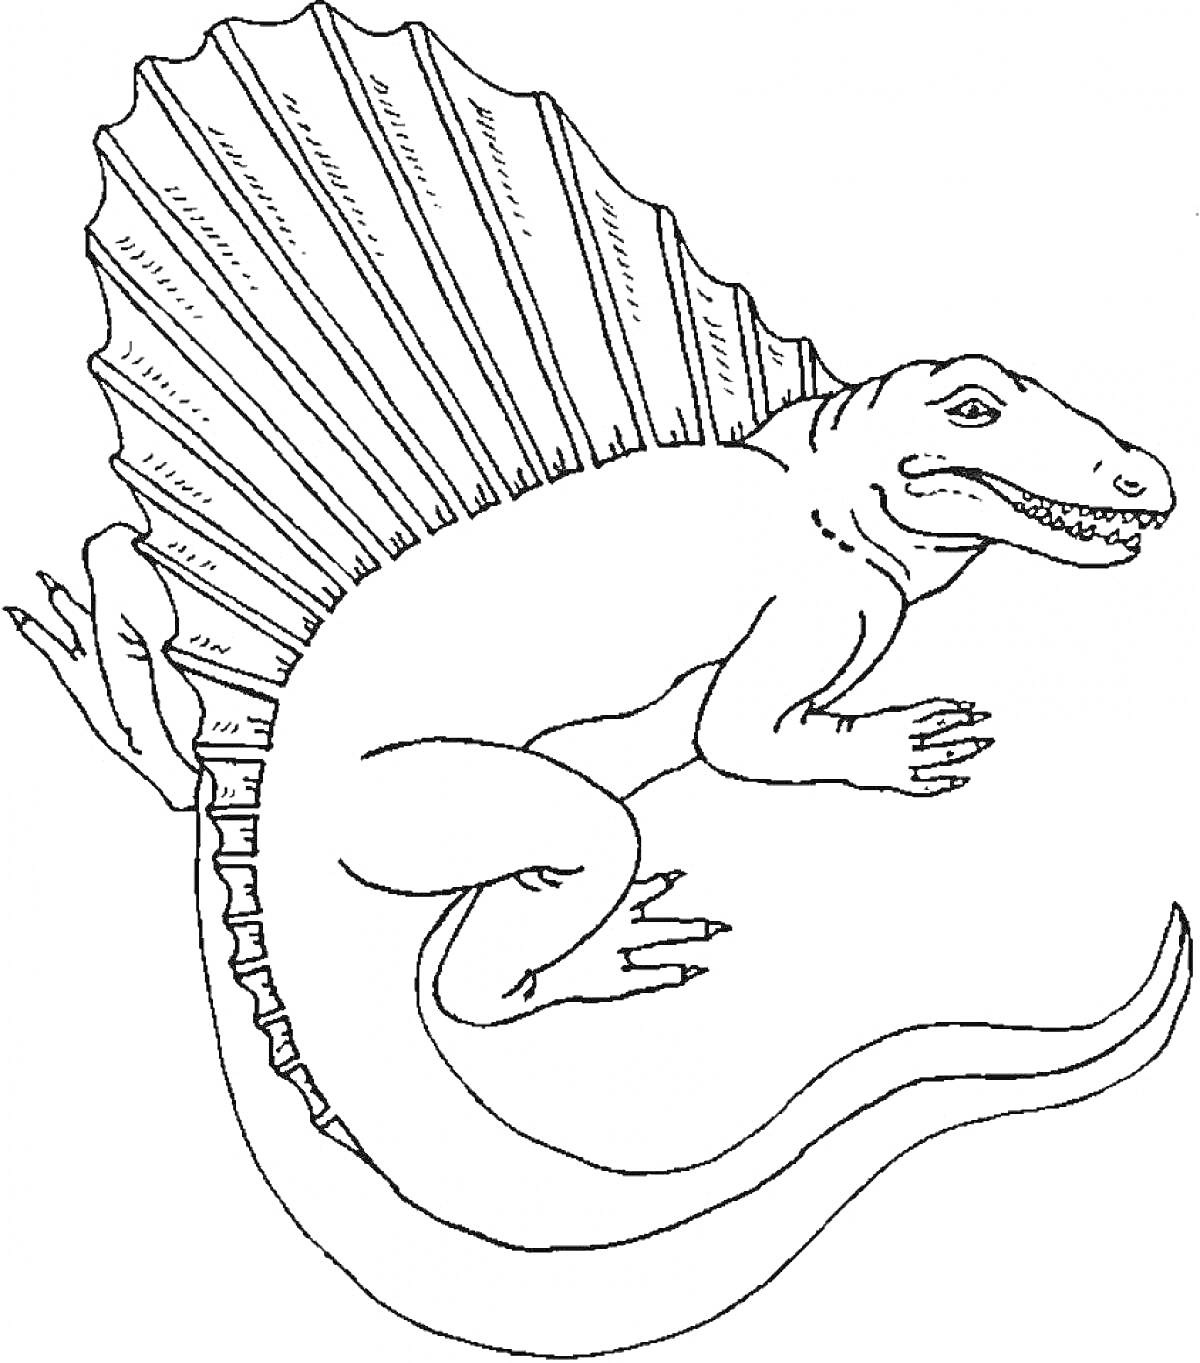 Динозавр с парусом на спине